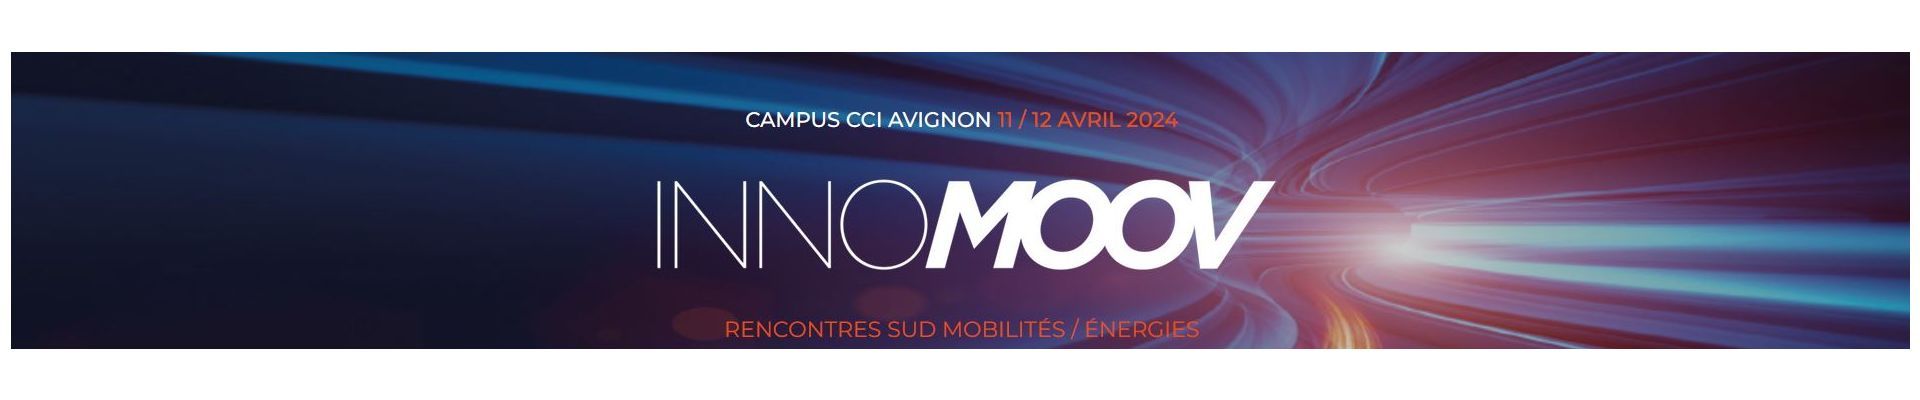 Innomoov, les rencontres sud mobilités / énergies